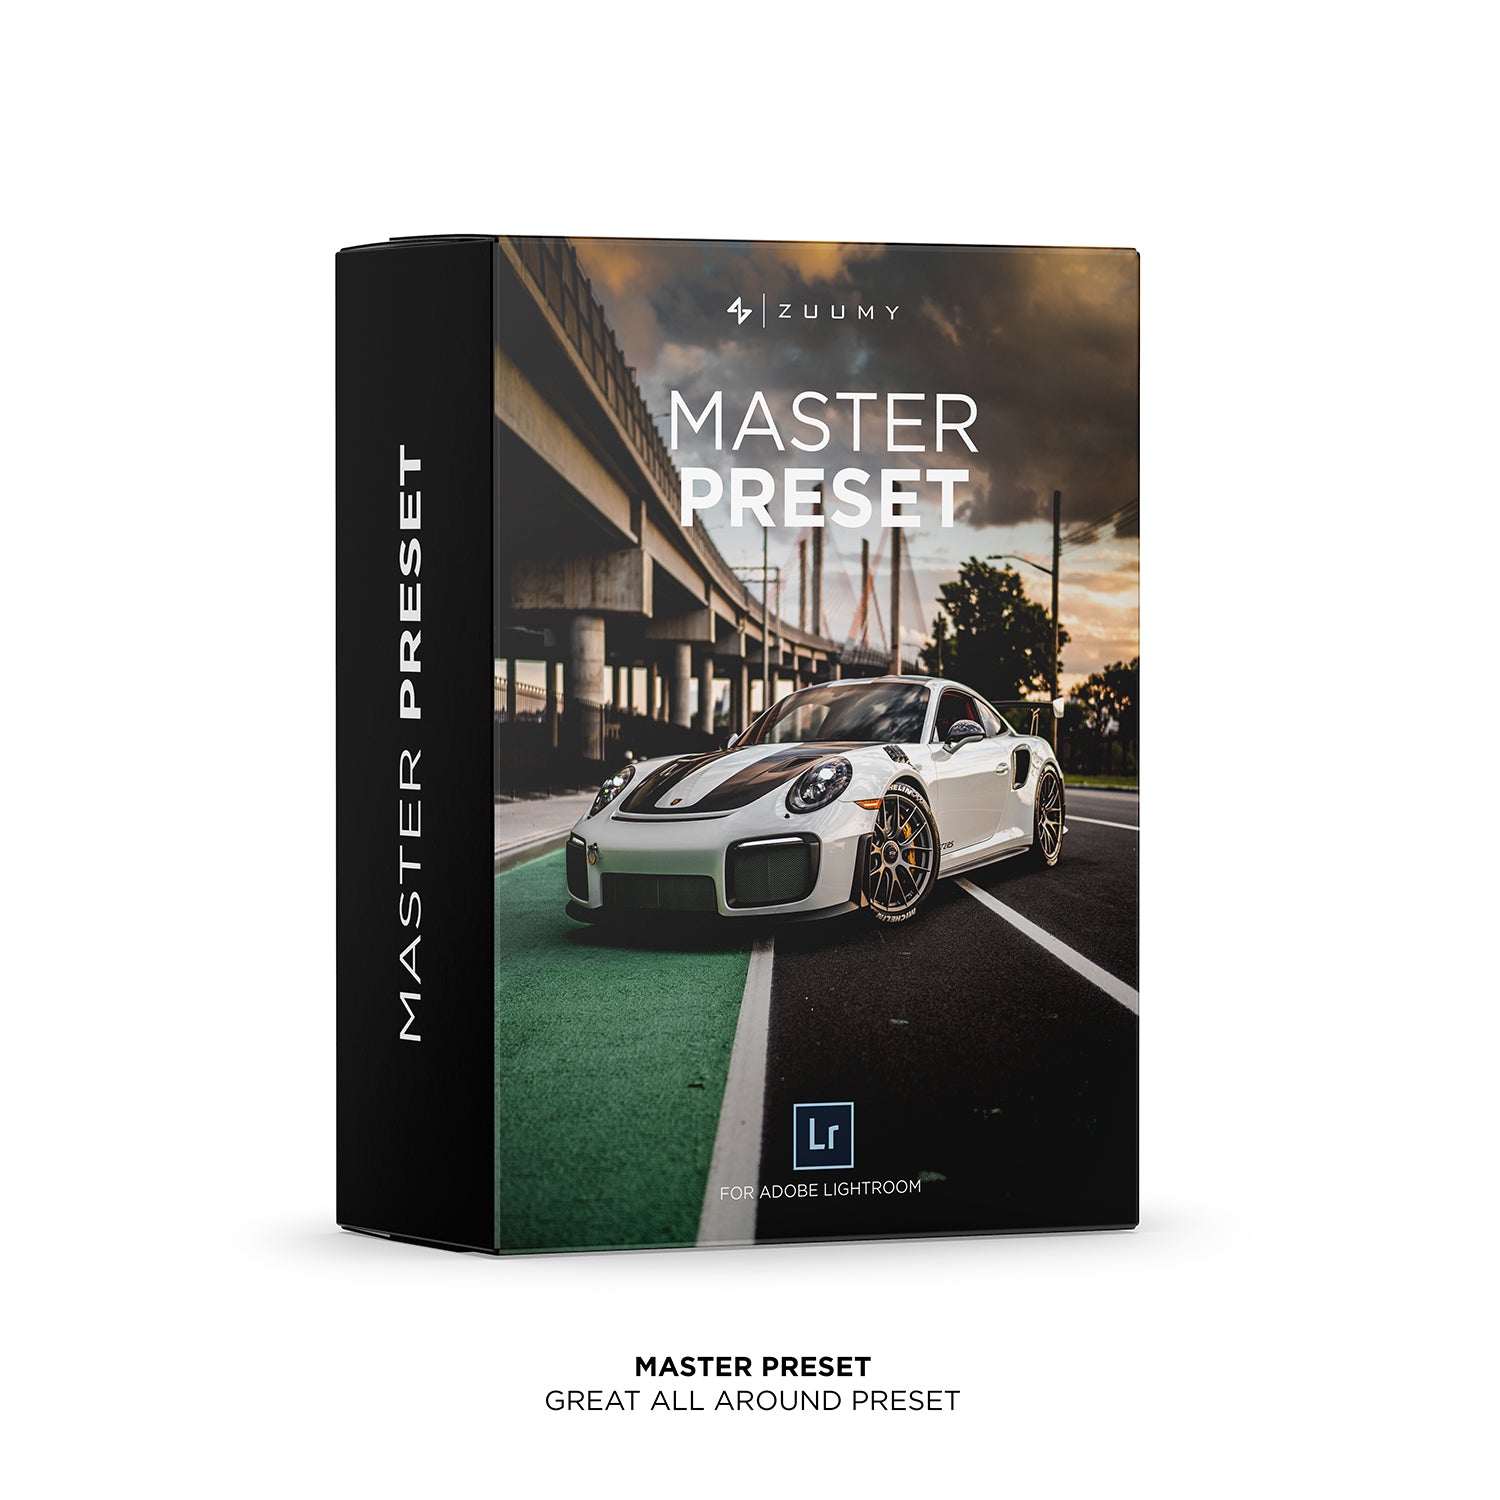 Adobe Lightroom Preset | Master